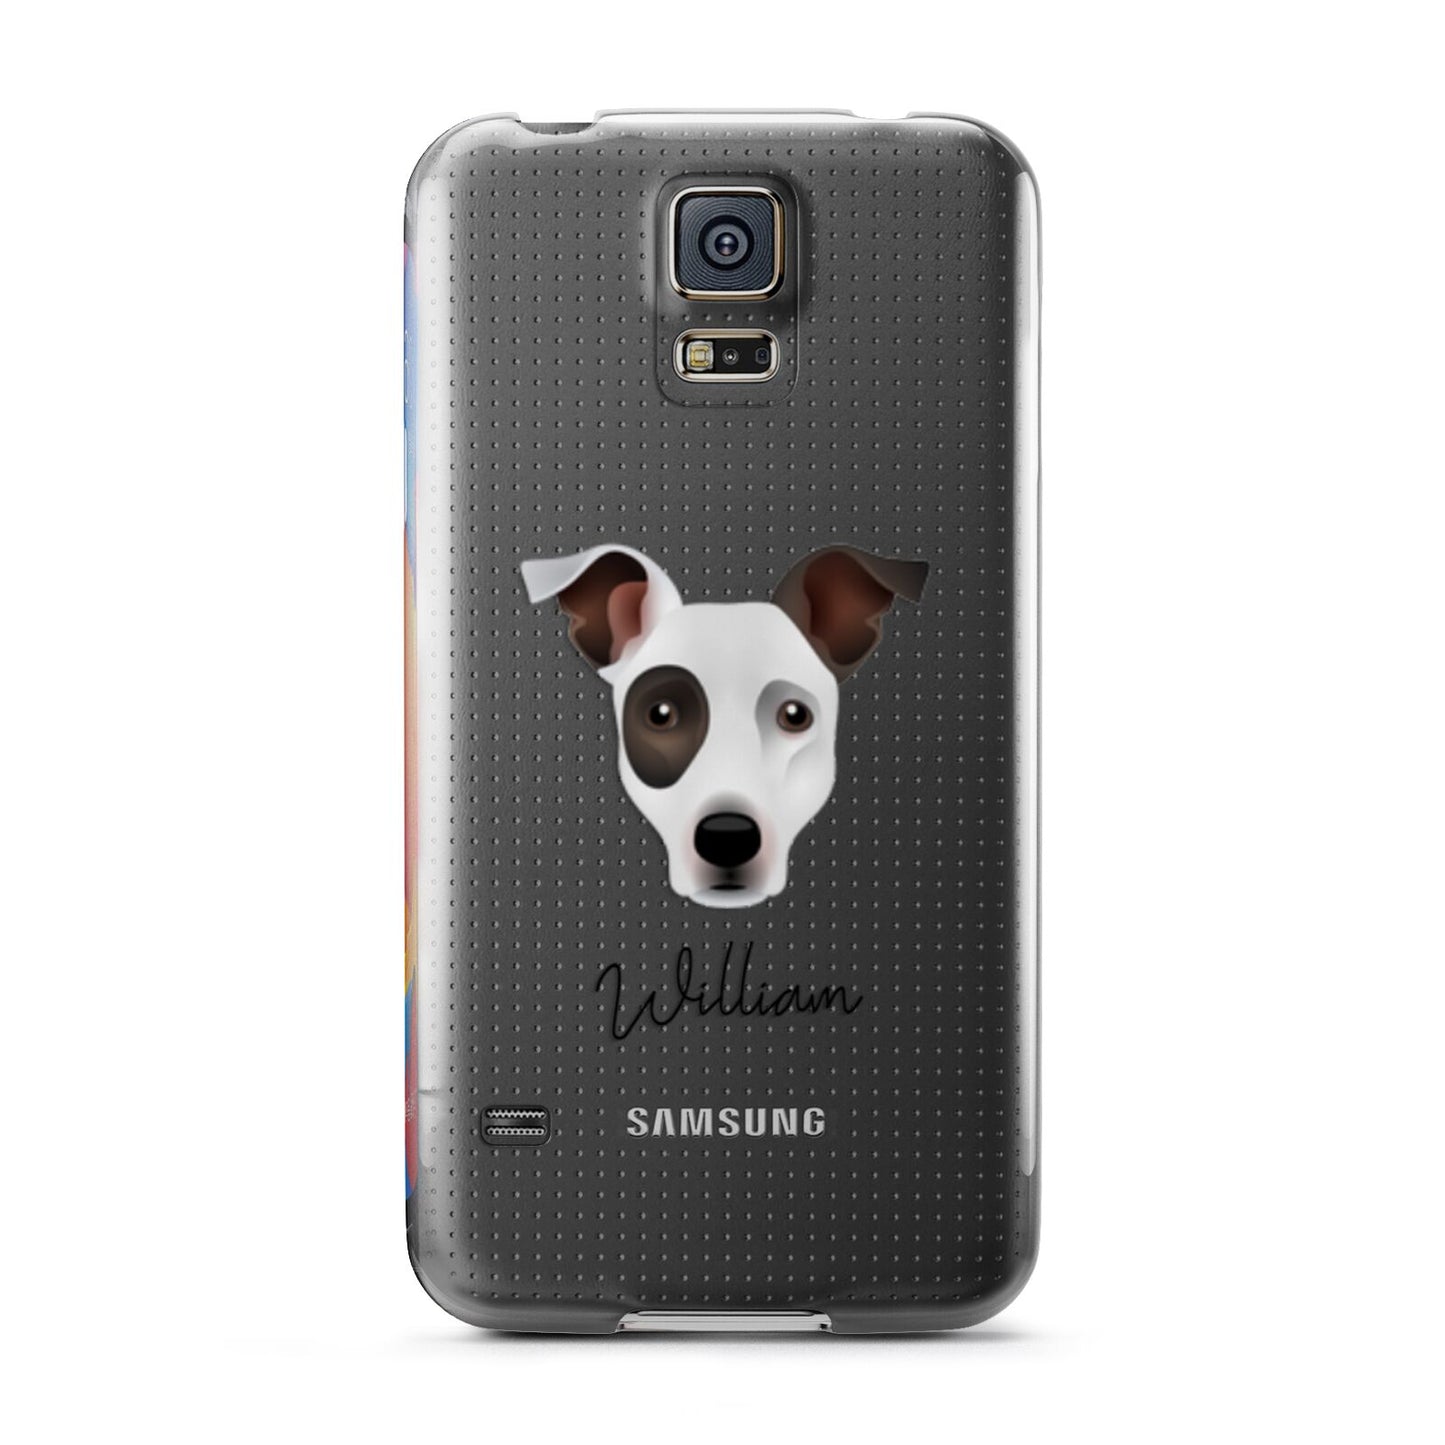 Staffy Jack Personalised Samsung Galaxy S5 Case